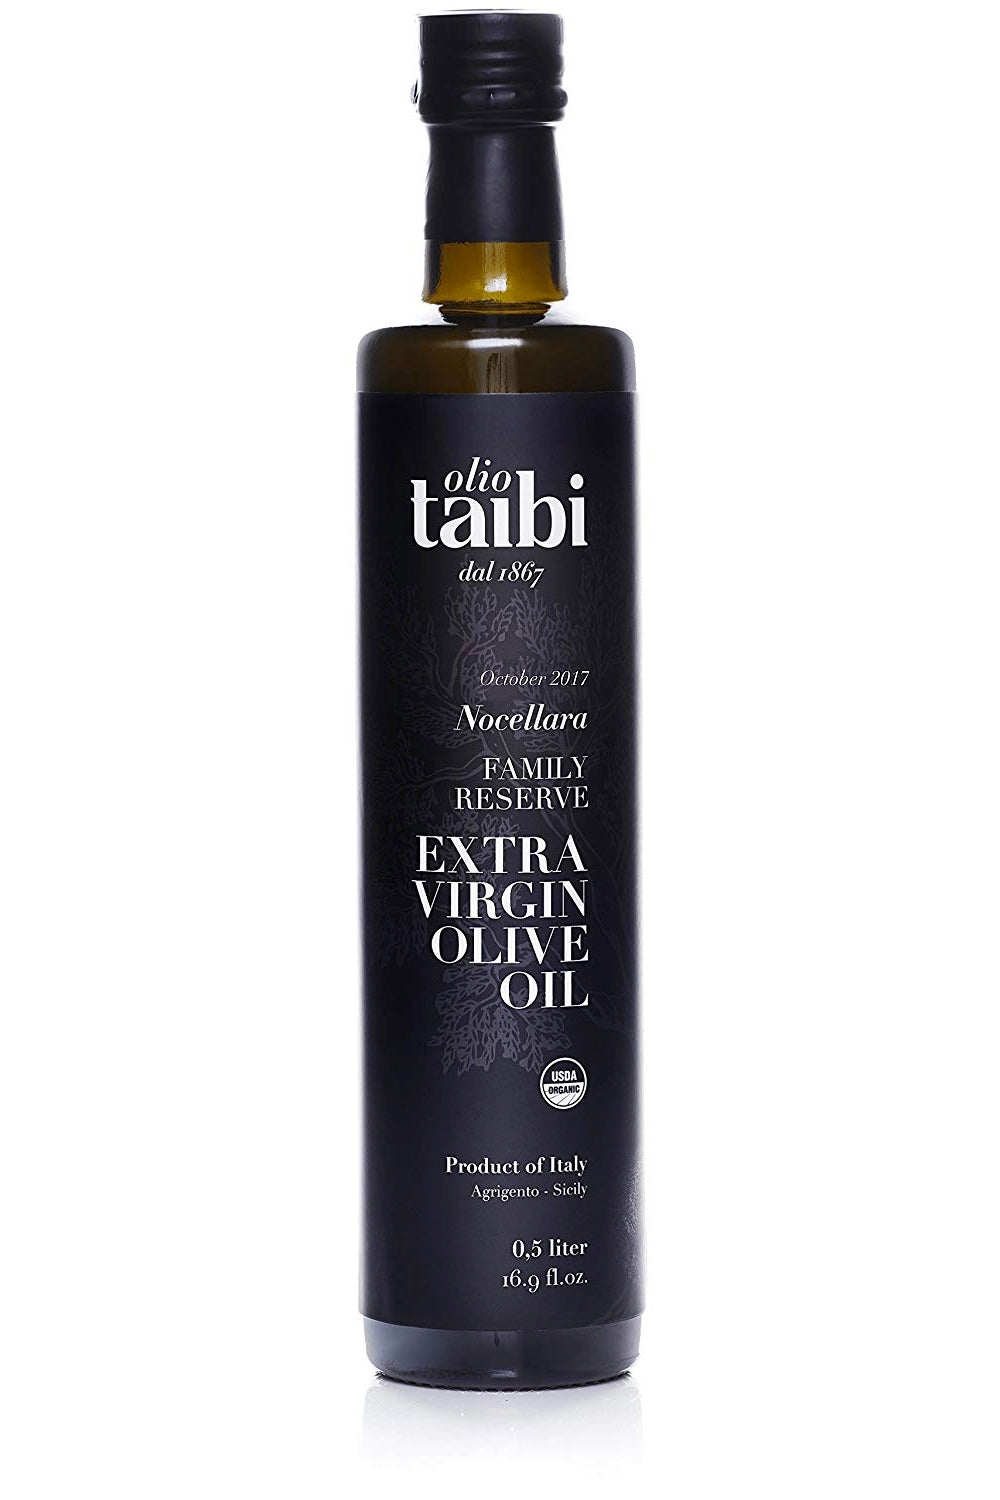 Olio Taibi "Nocellara" | Award-Winning, Organic Extra Virgin Olive Oil from Sicily